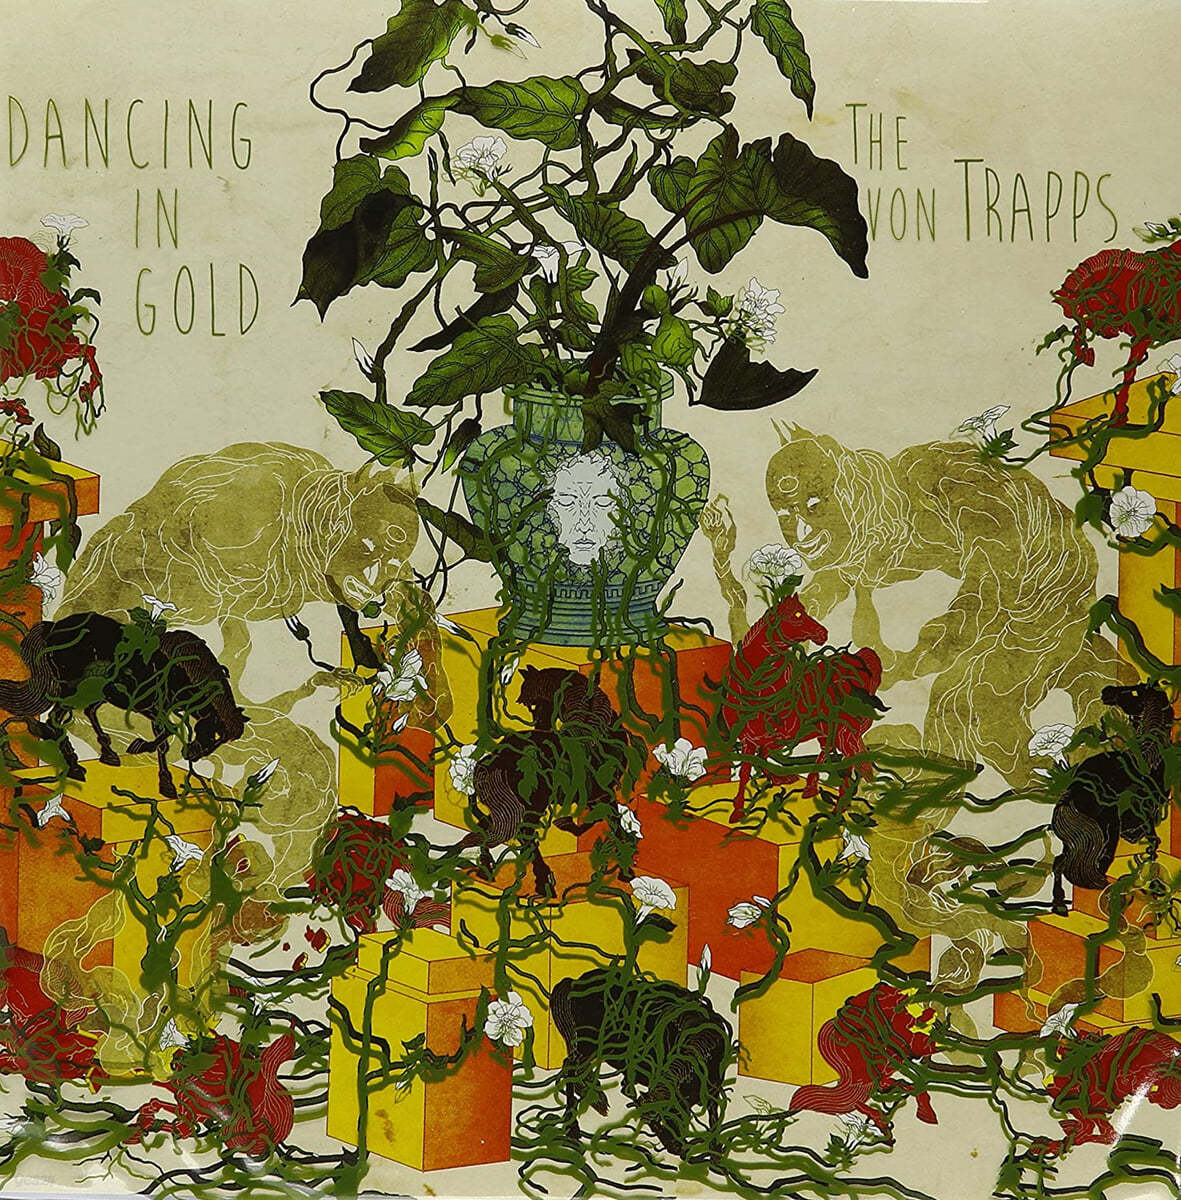 The von Trapps (폰 트랩스) - Dancing In Gold [10인치 투명 골드 컬러 LP] 